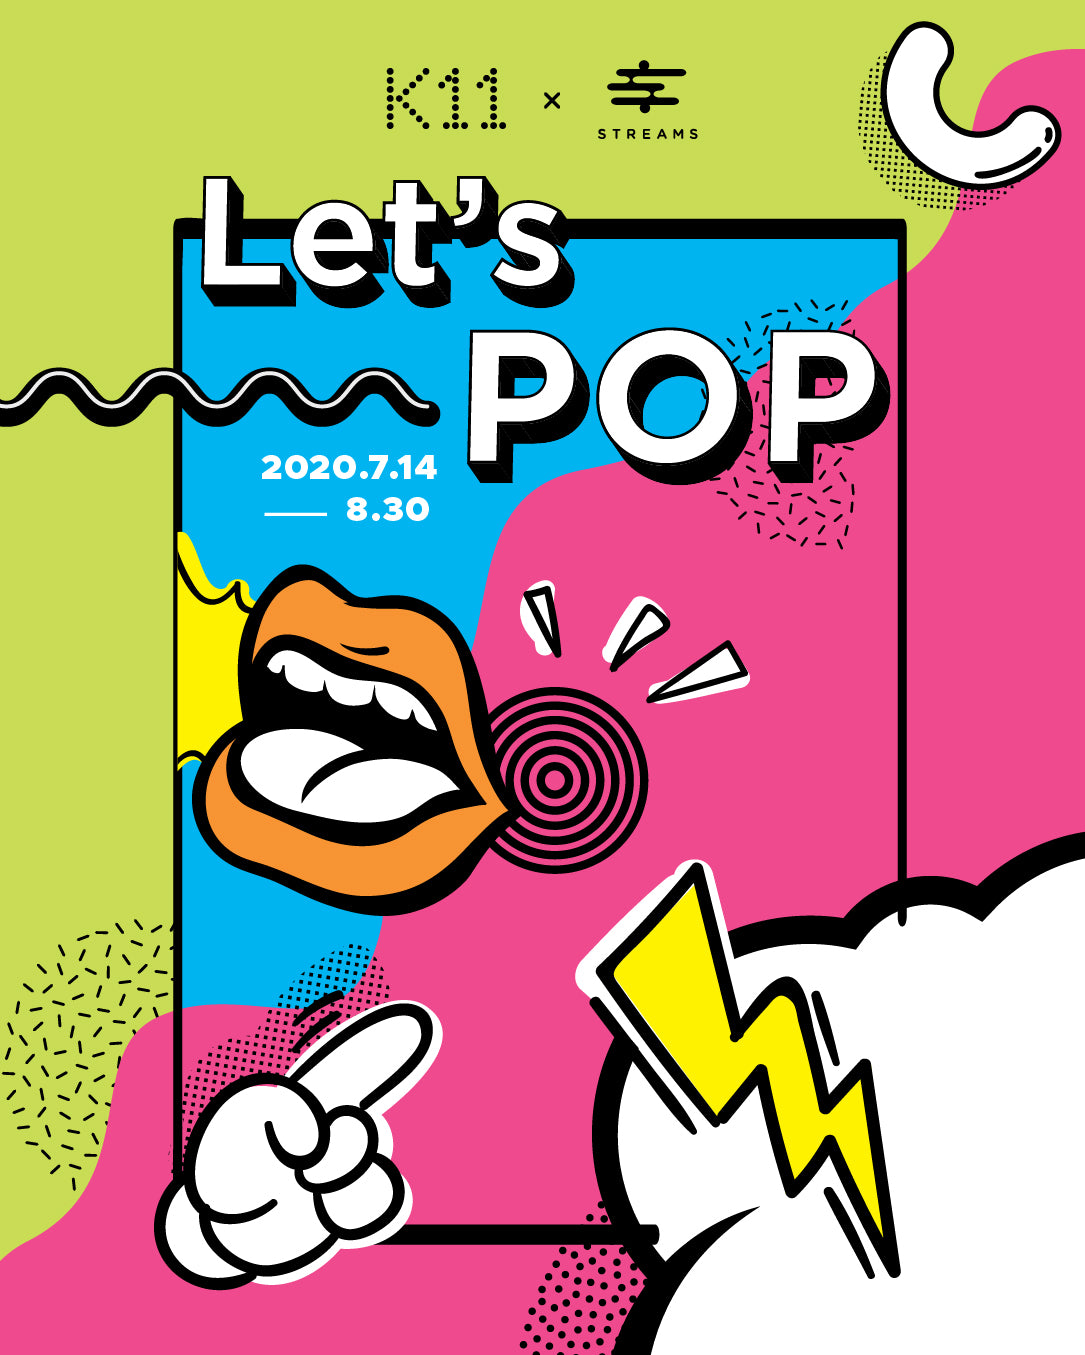 LET'S POP! K11 x STREAMS Pop-up Store